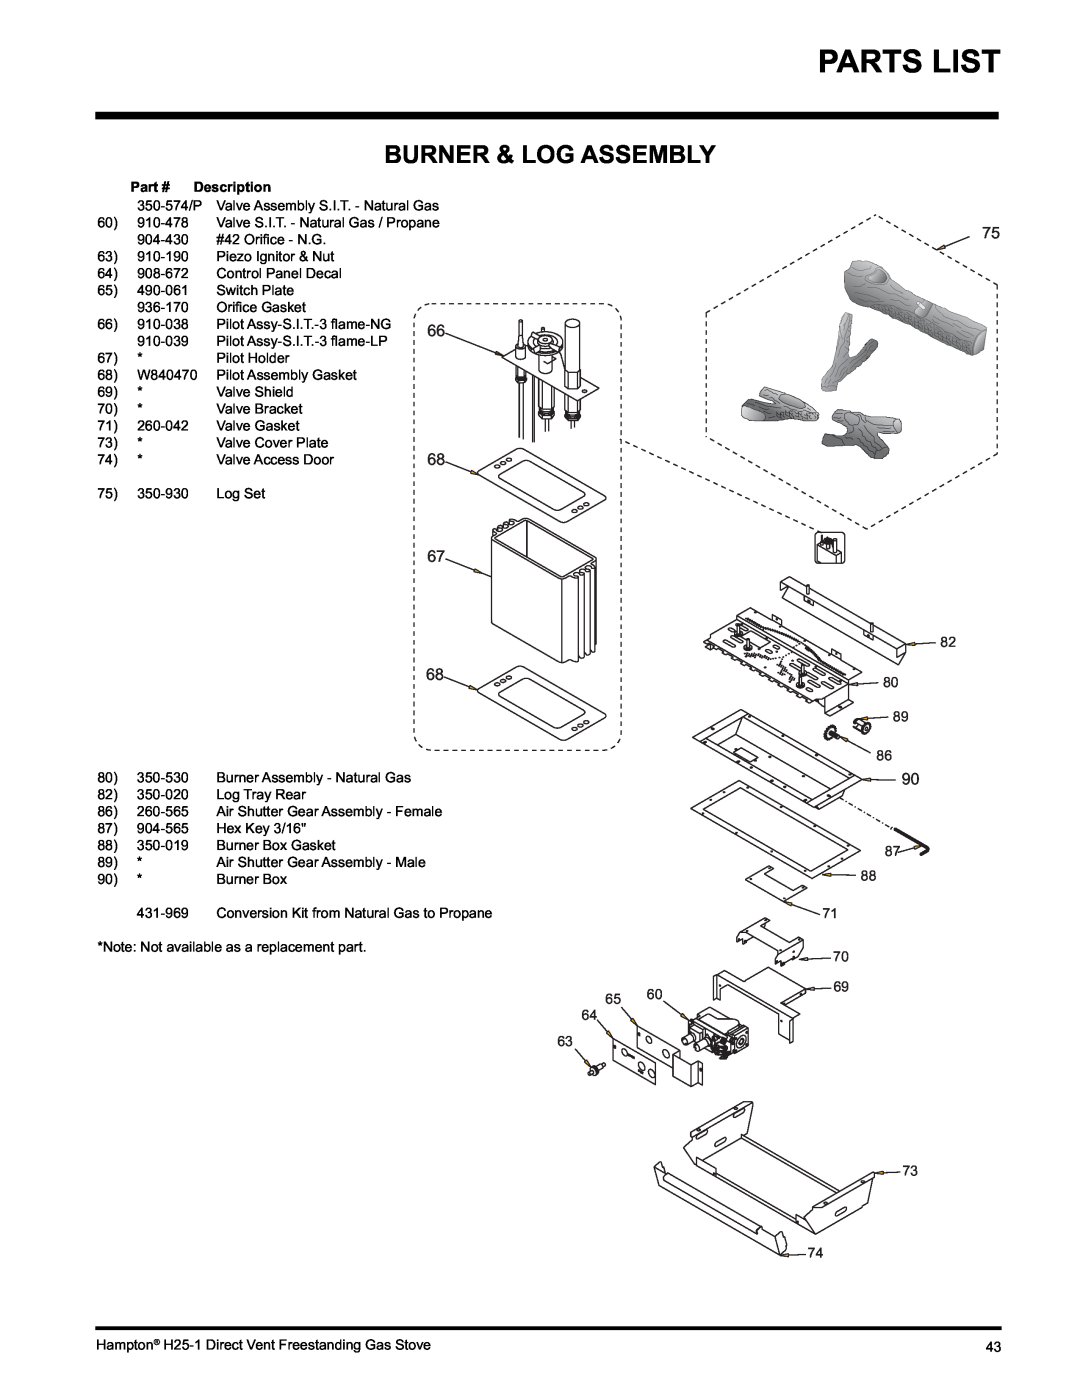 Hampton Direct H25-LP1 Propane, H25-NG1, H25-LP1 installation manual Burner & Log Assembly, Description 